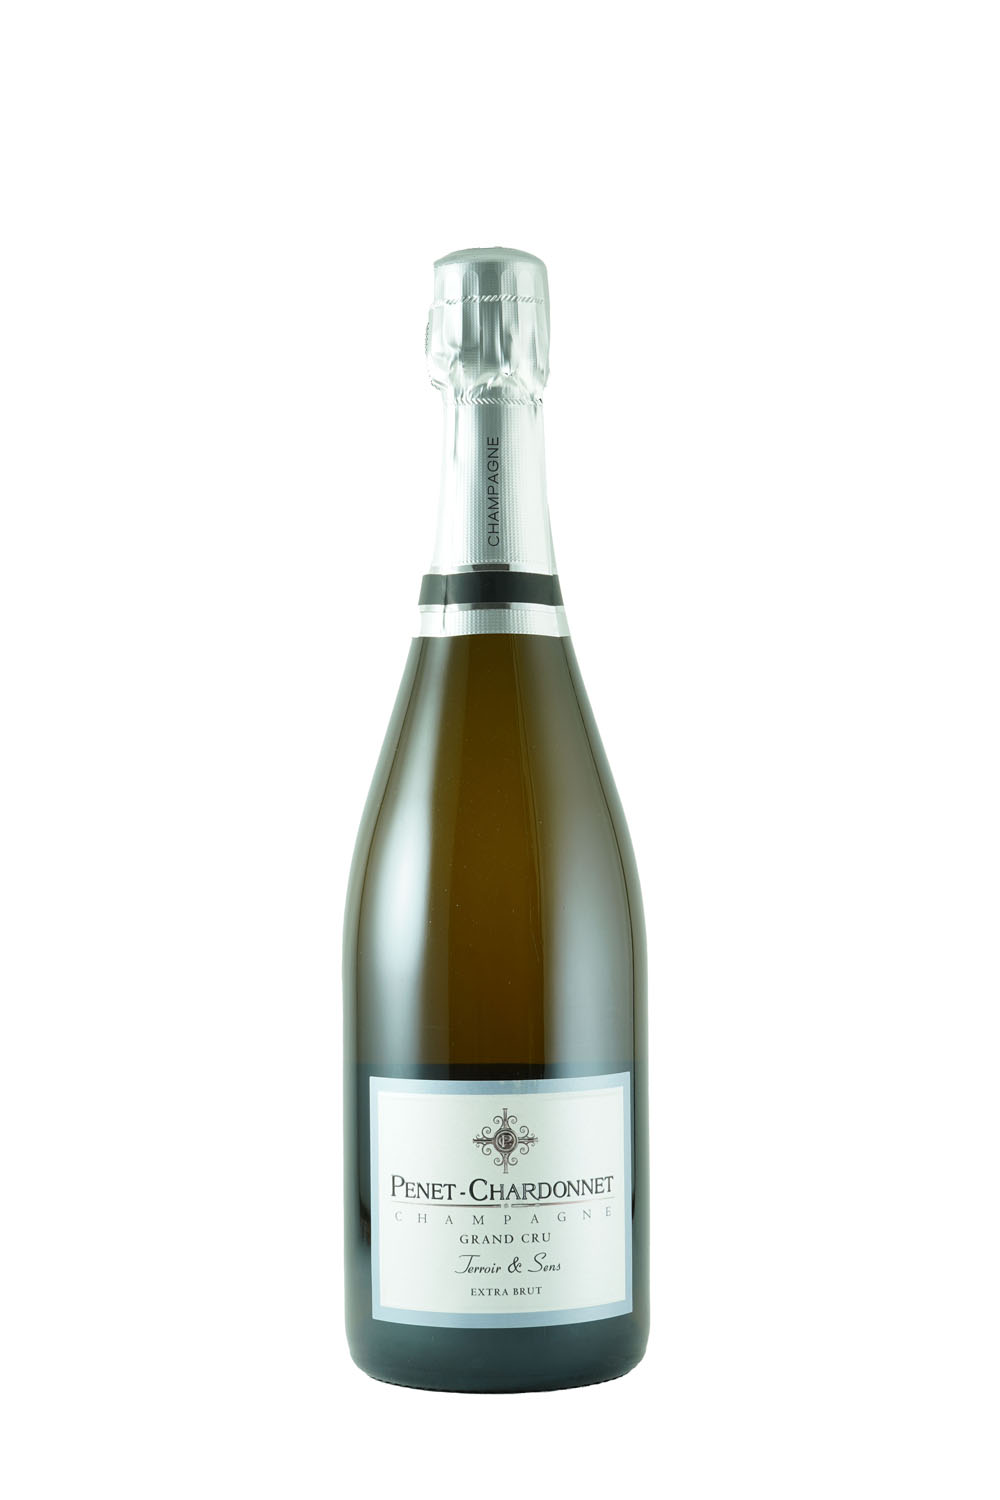 Penet-Chardonnet - Terroir & Sens Grand Cru Extra Brut